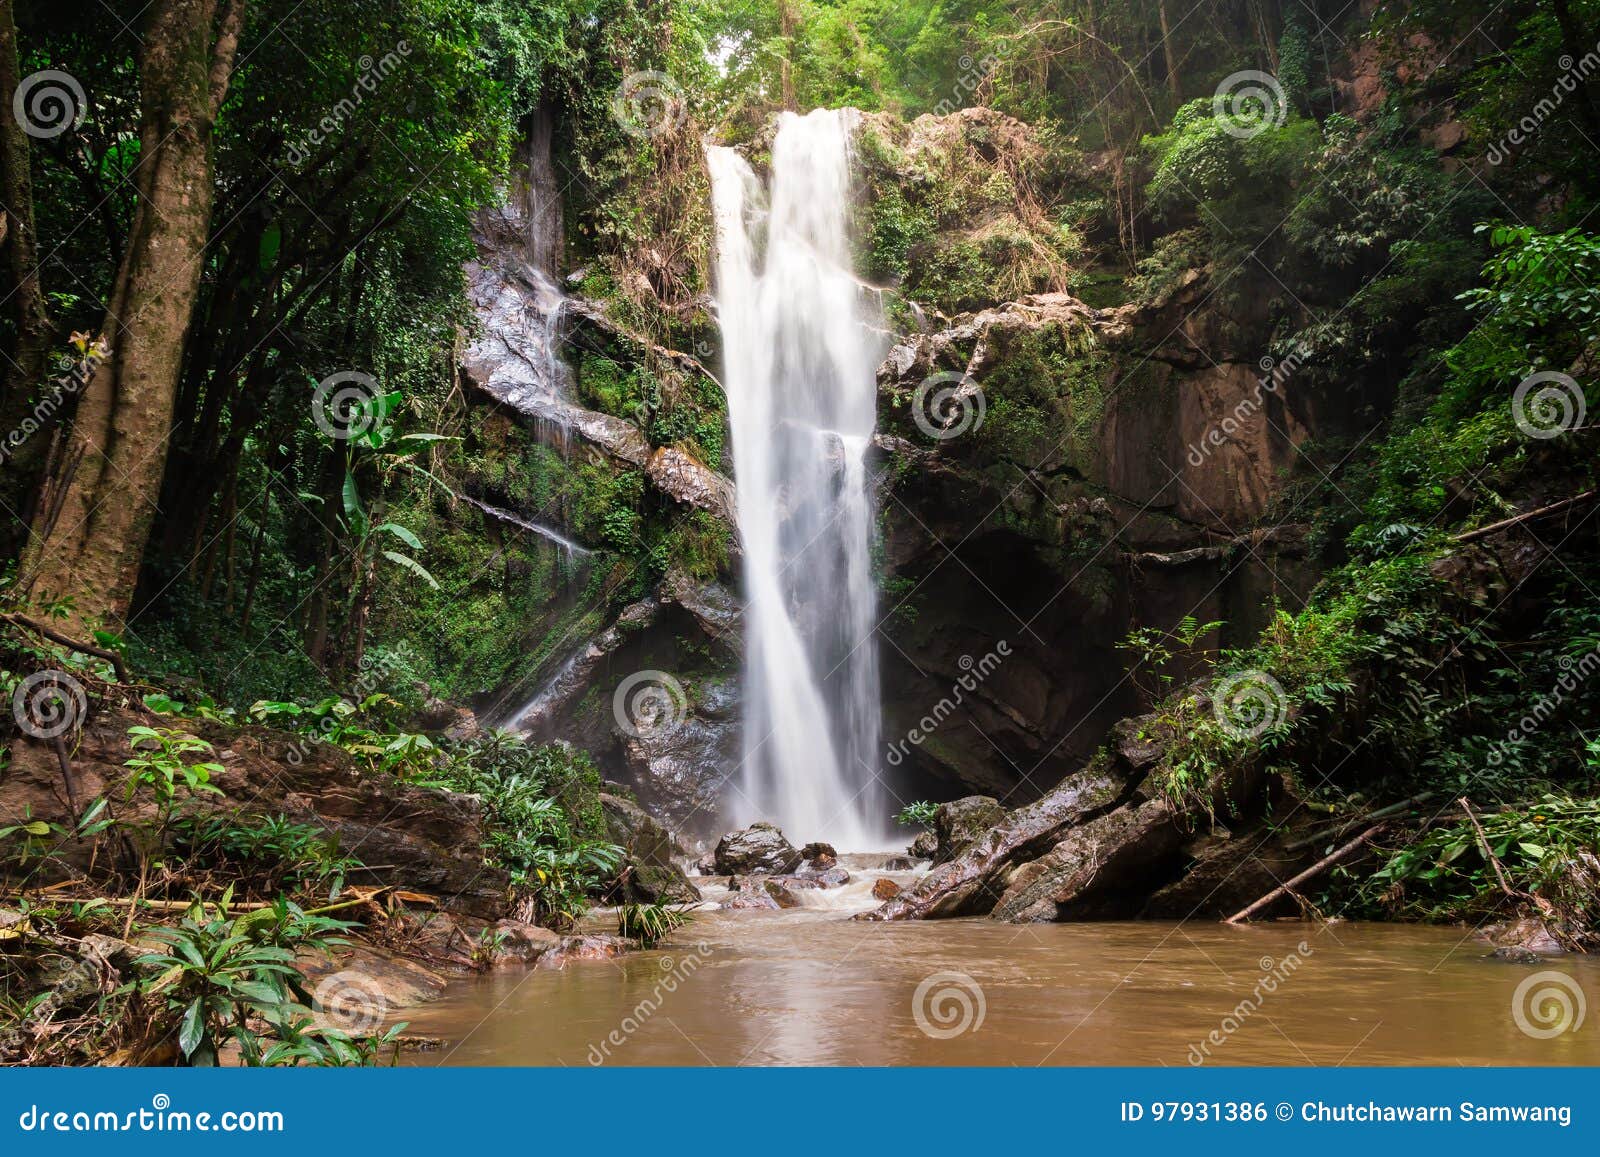 mork fa waterfall of doi suthep pui national park